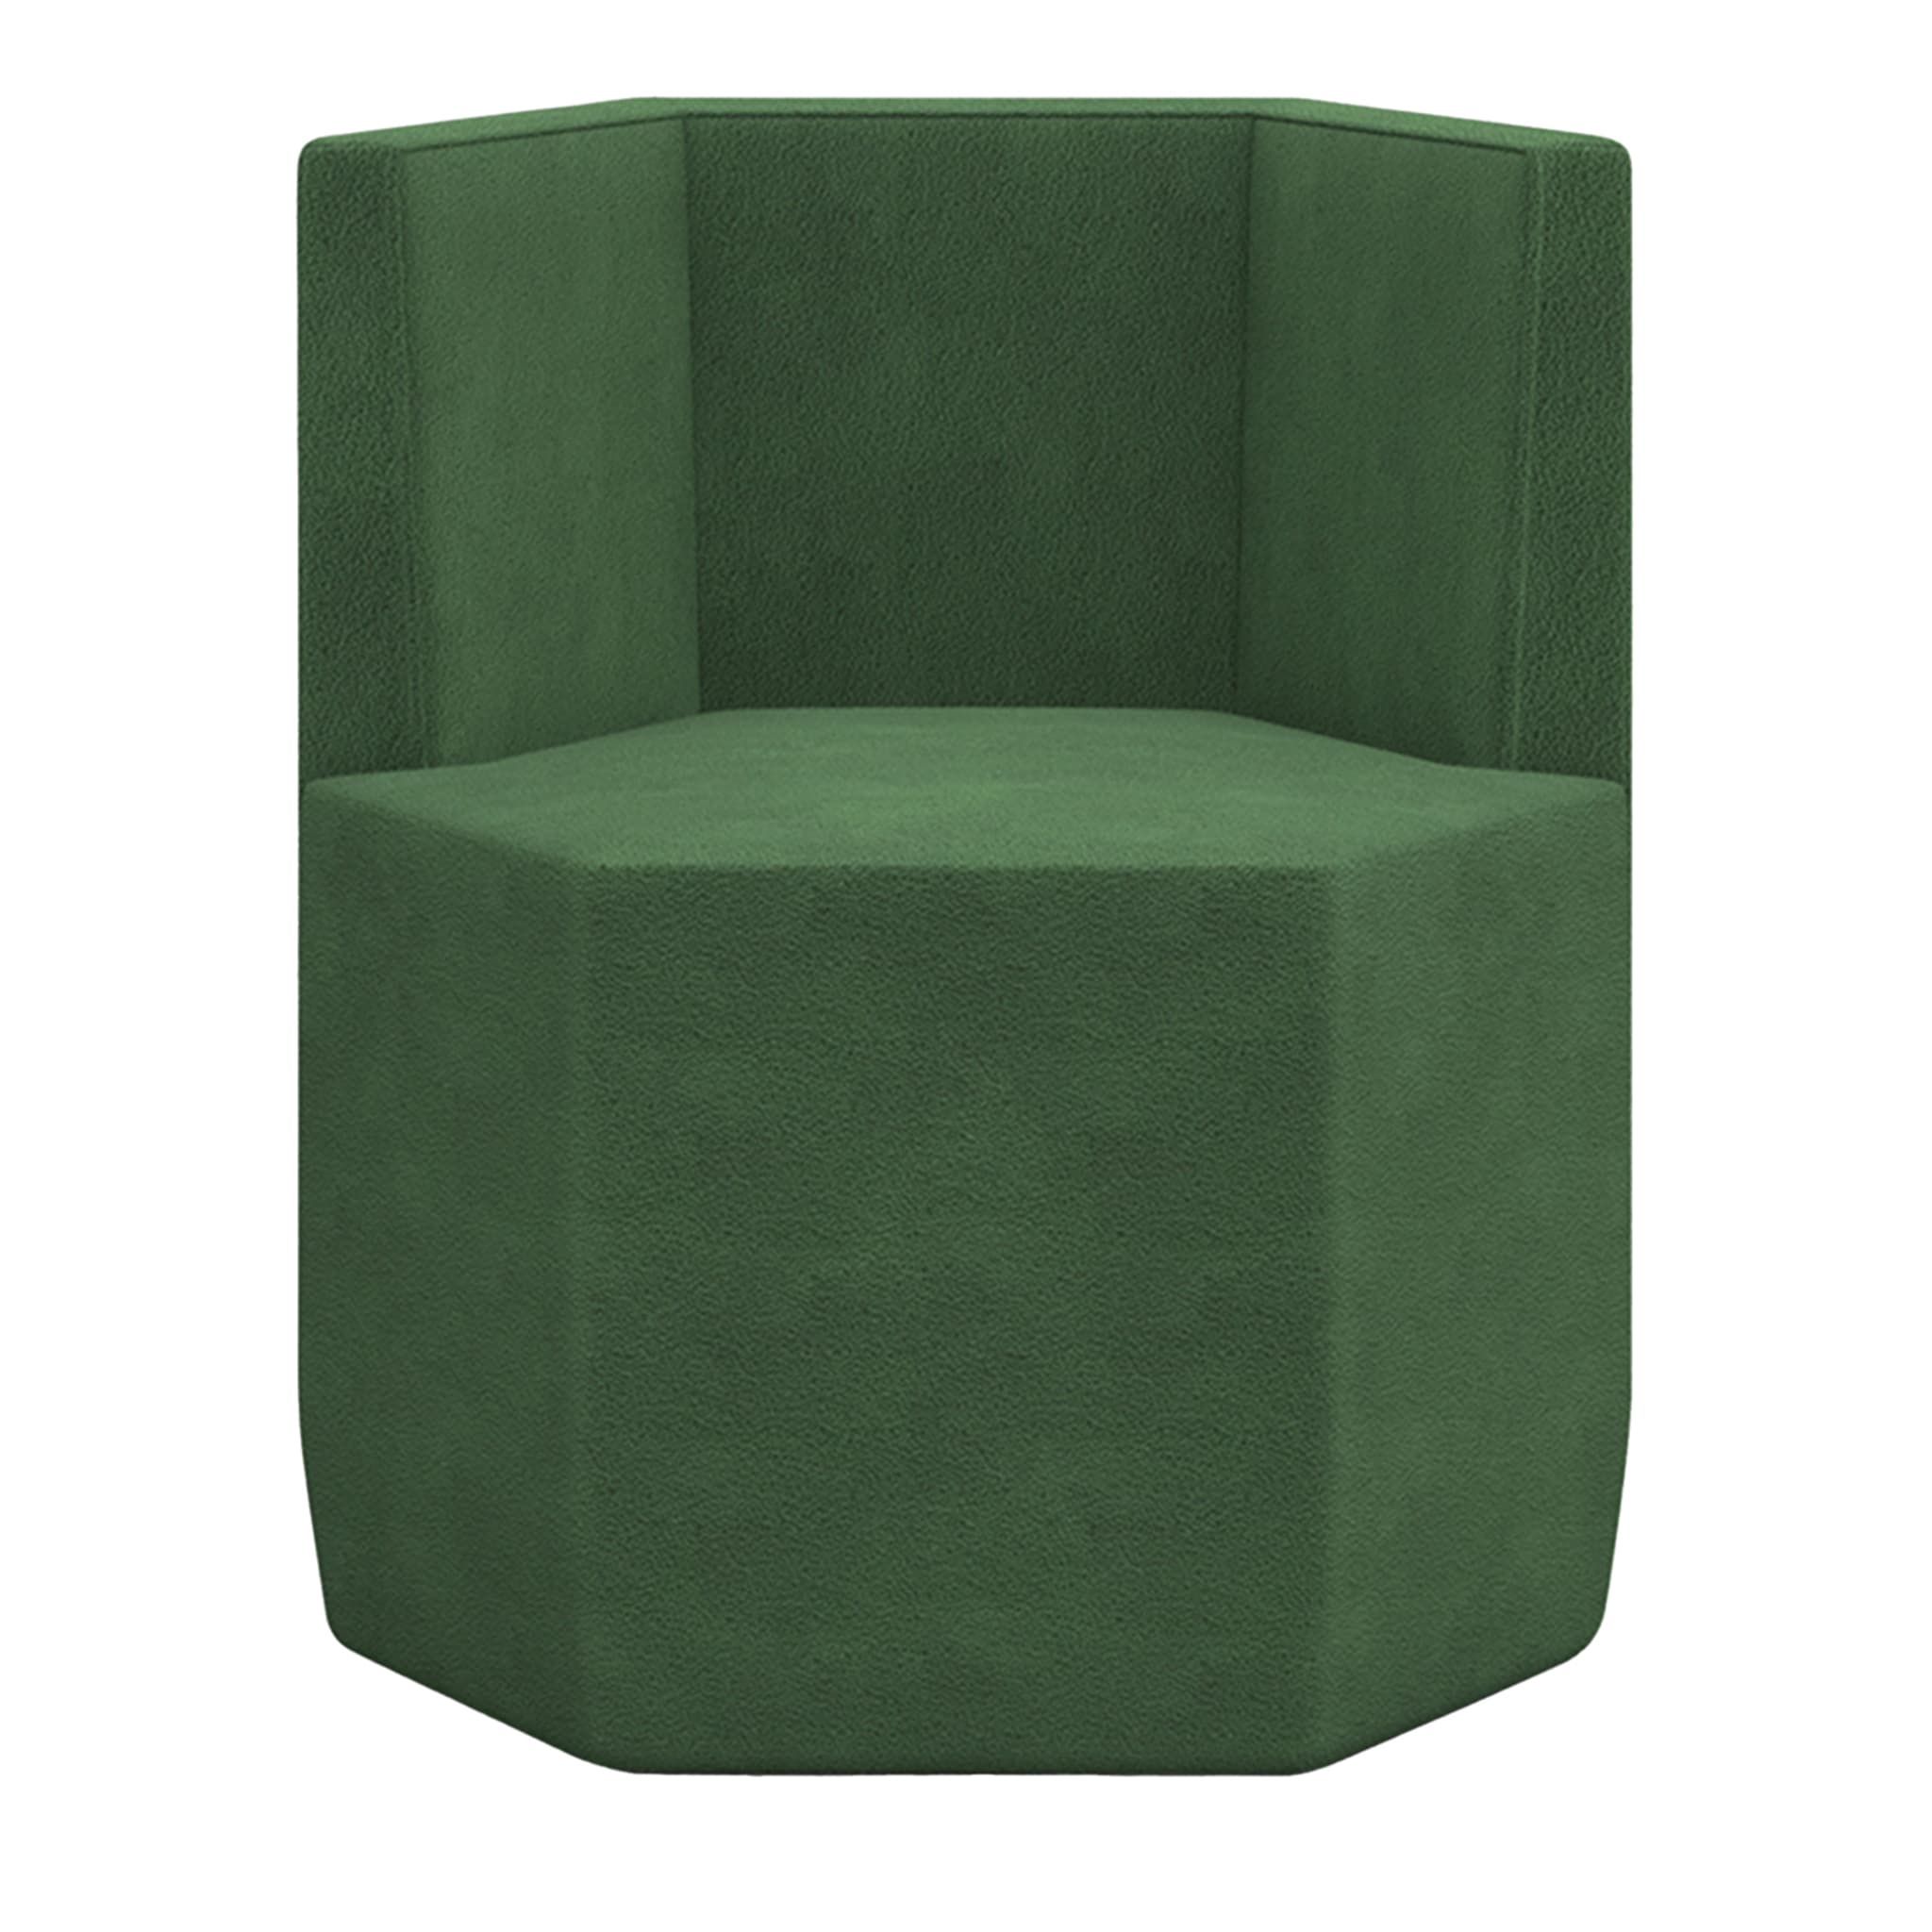 Tigram Niedriger Grüner Sessel von Italo Pertichini - Hauptansicht